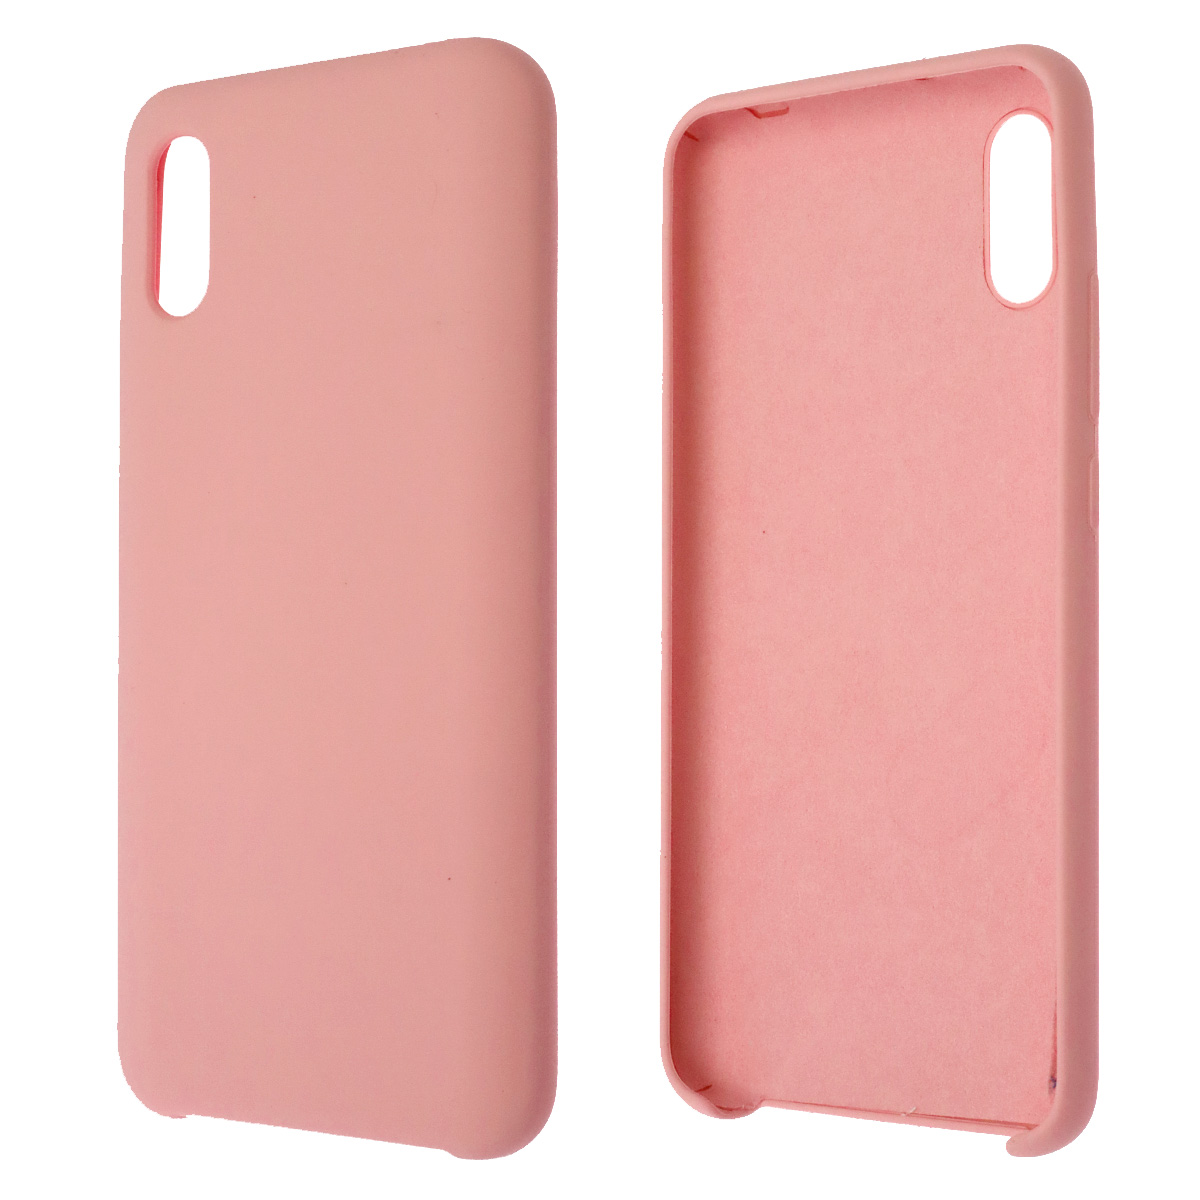 Чехол накладка Silicon Cover для XIAOMI Redmi 9A, силикон, бархат, цвет светло розовый